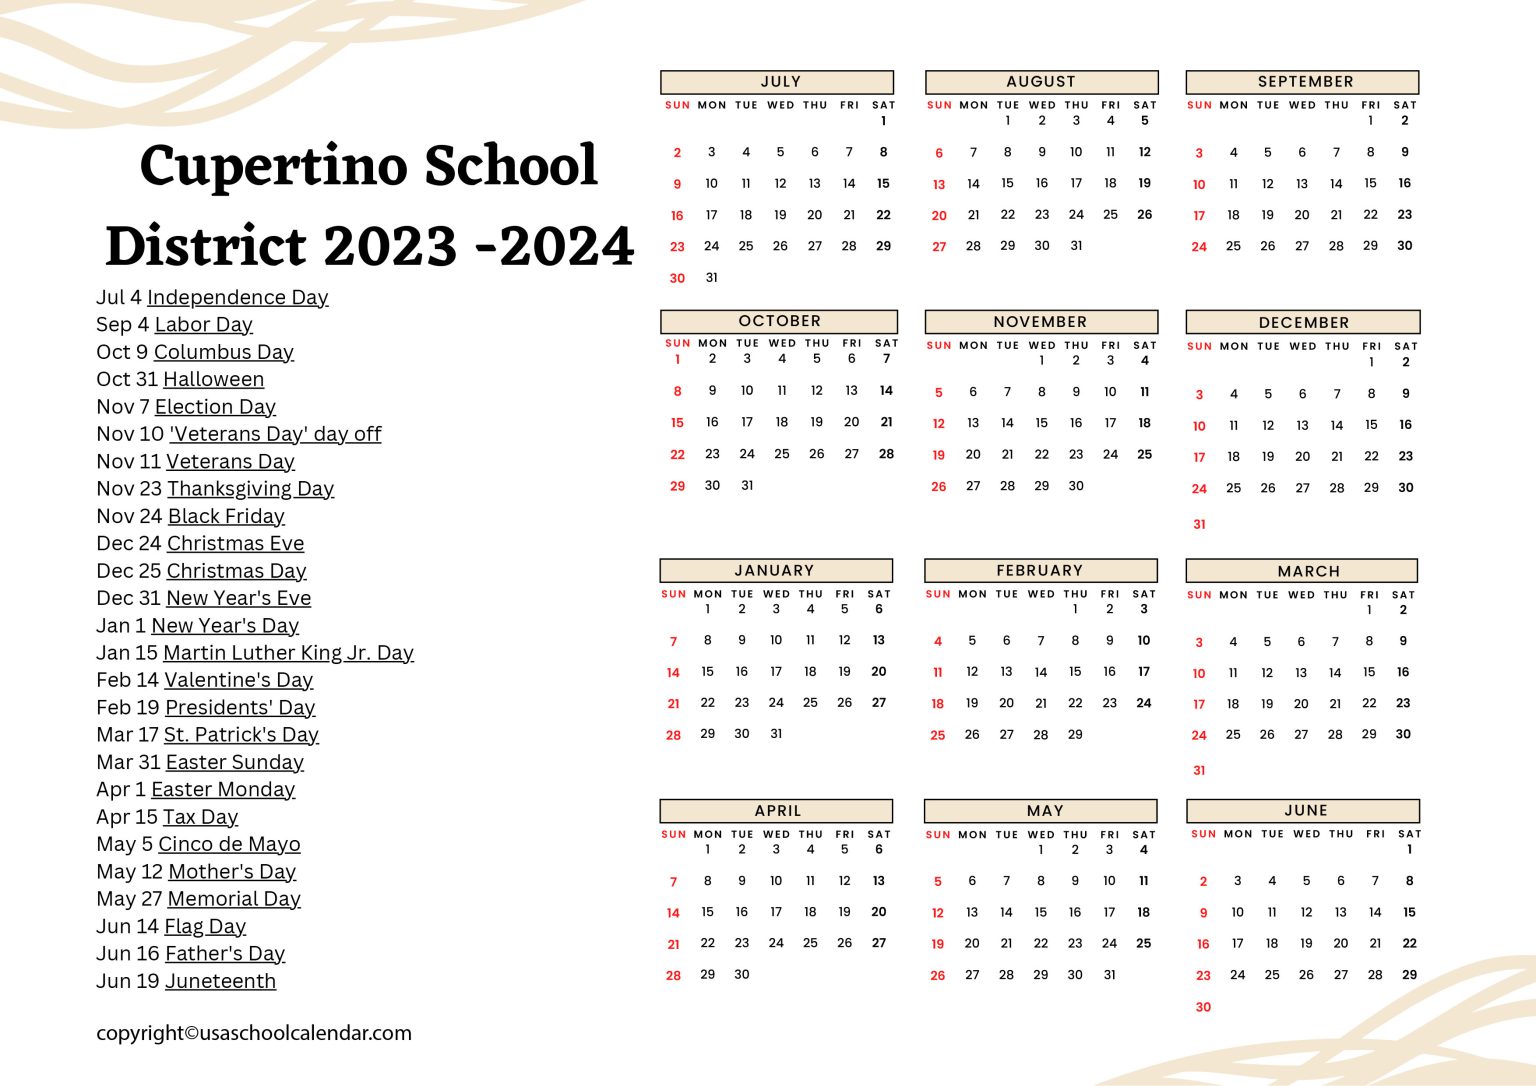 Cupertino School District Calendar Holidays 20232024 [CUSD]